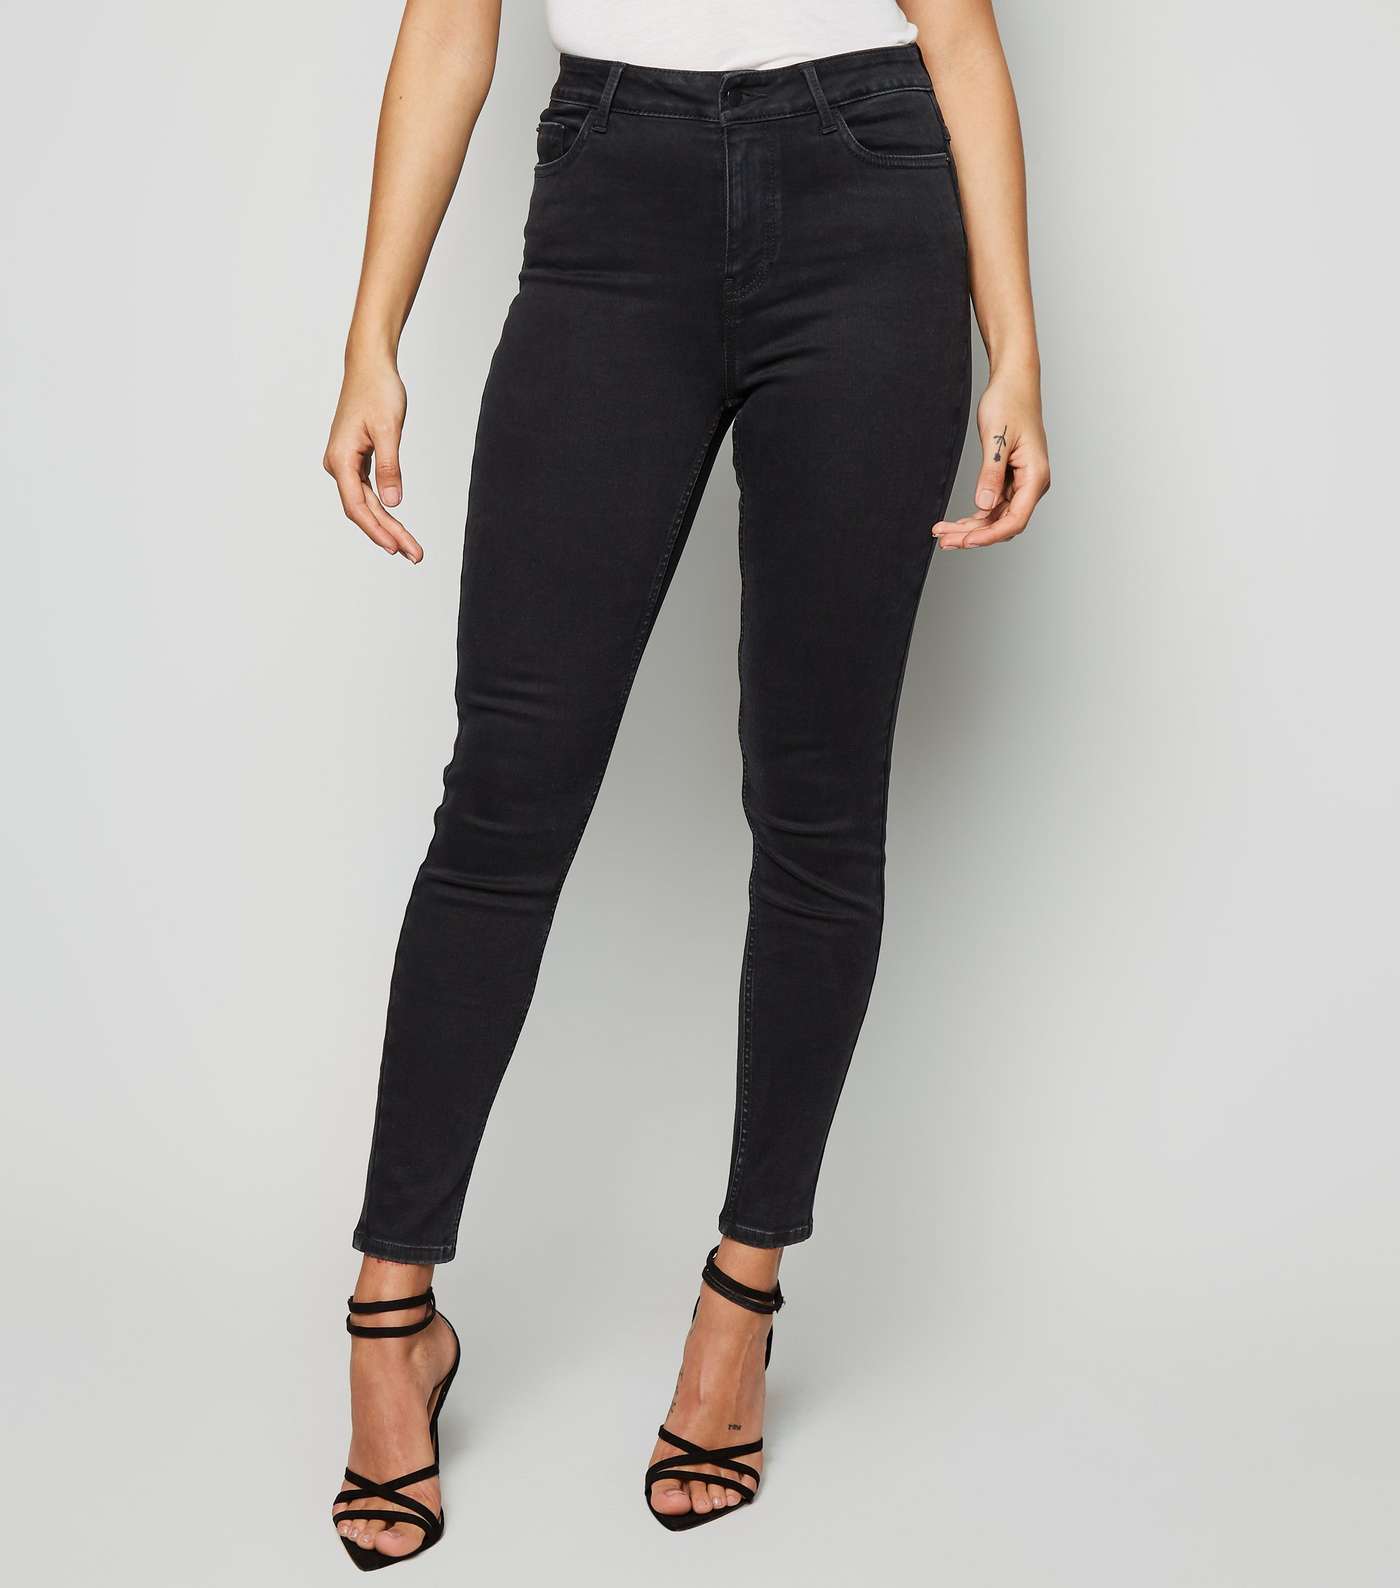 Black 'Lift & Shape' Jenna Skinny Jeans Image 2